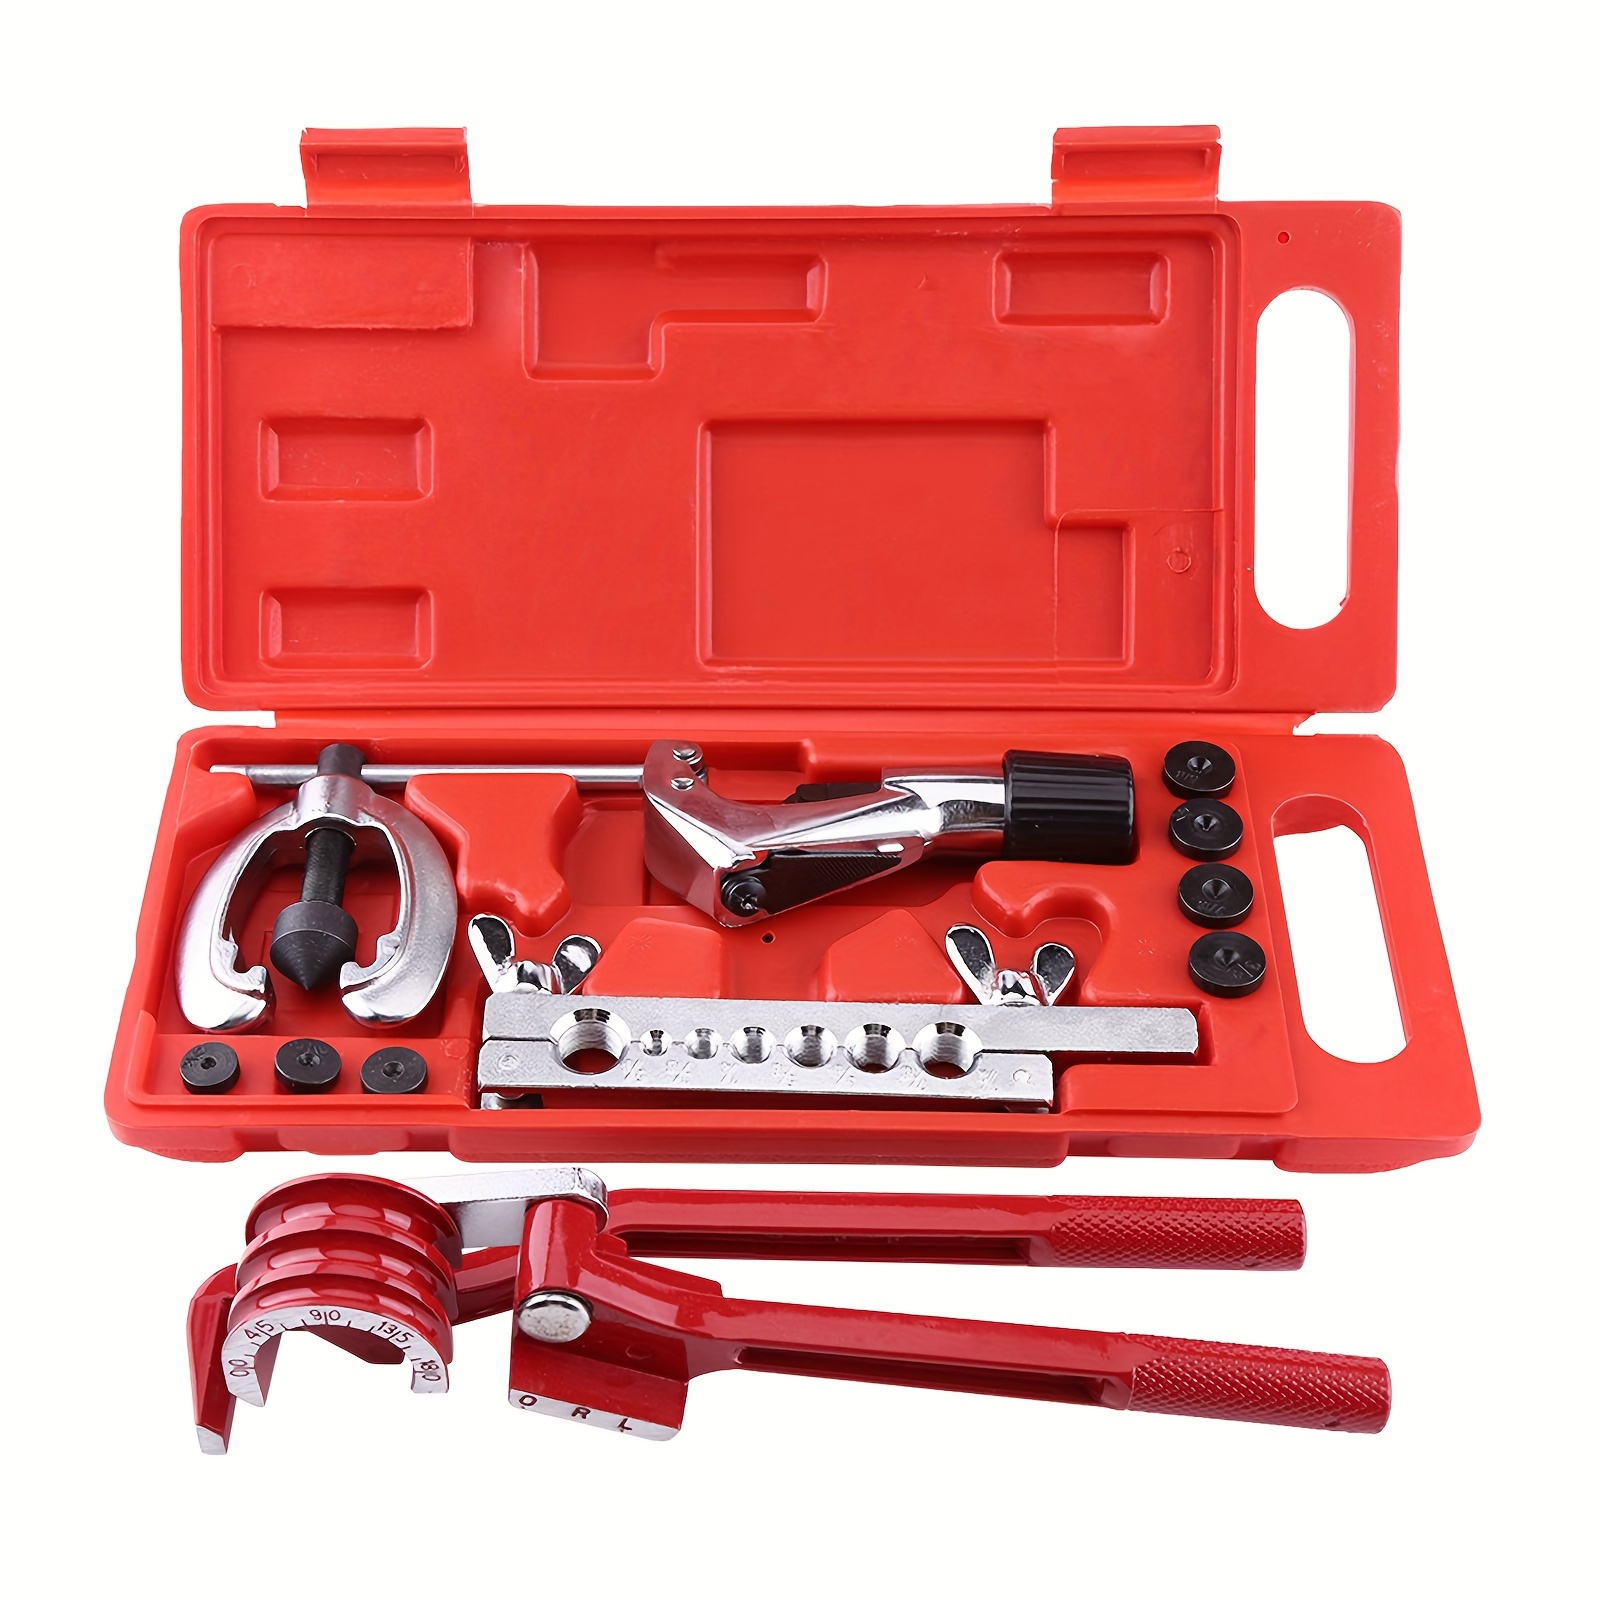 

11pcs Pipe Kit Brake Fuel Tube Repair Flare Kit With Cutter Bending Tool Set Tube Bending And Tool Kit For Auto